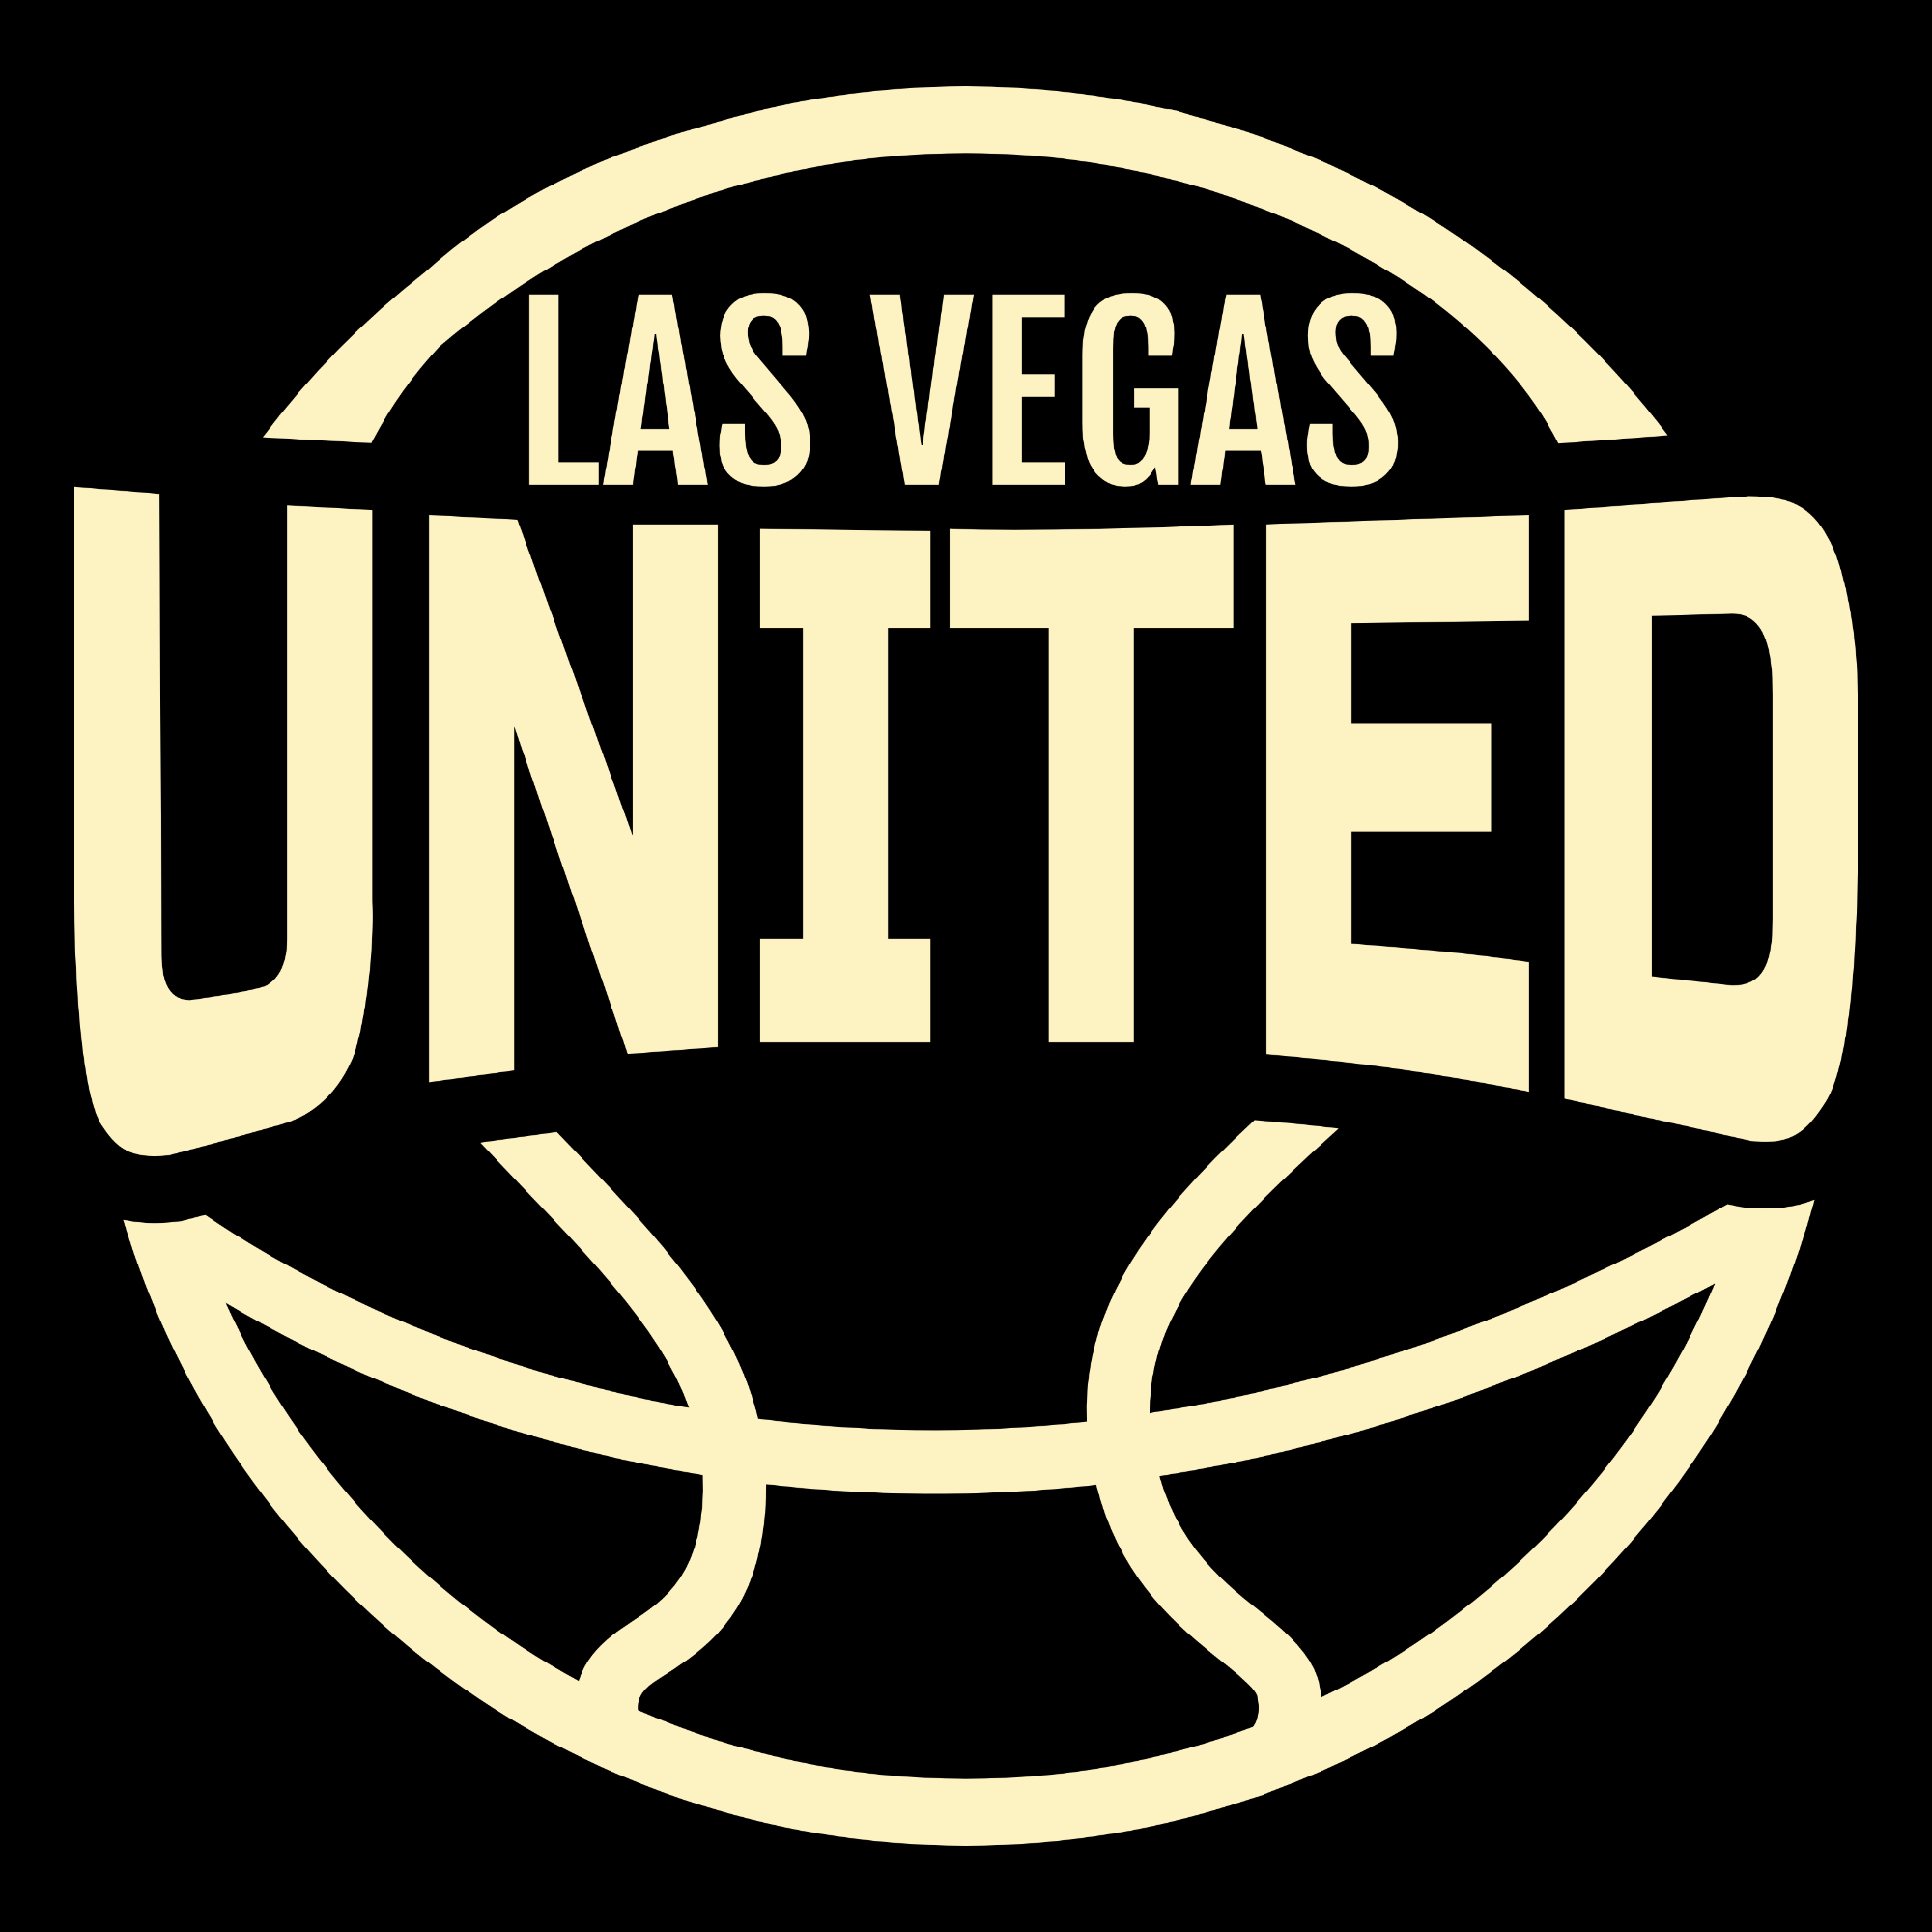 Organization logo for Las Vegas United Basketball Club